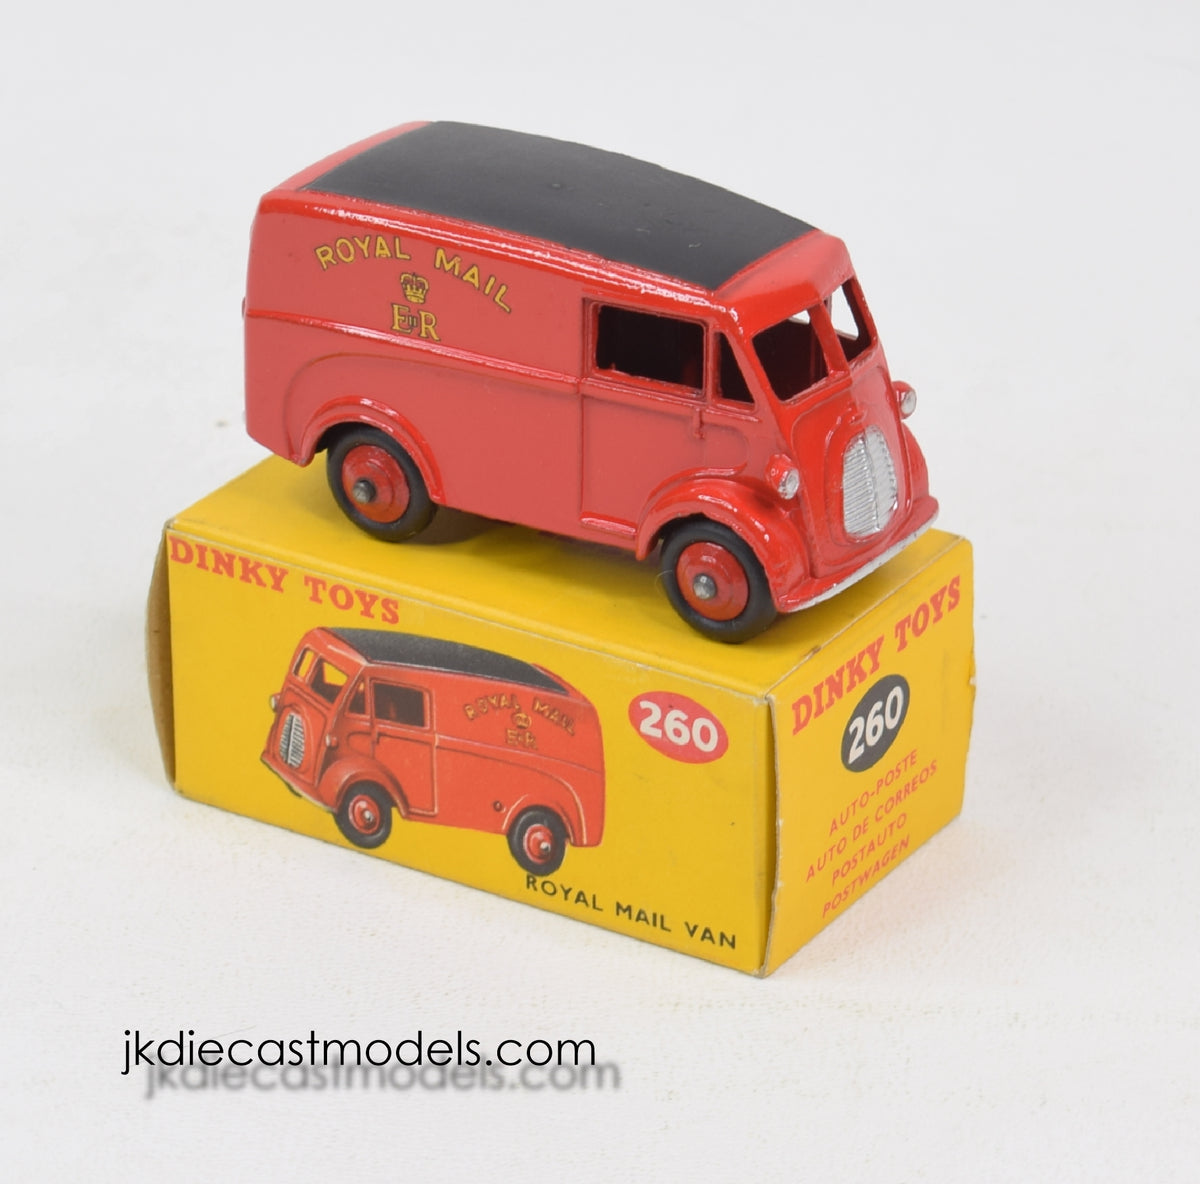 Dinky toys 260 Royal Mail Virtually Mint/Nice box